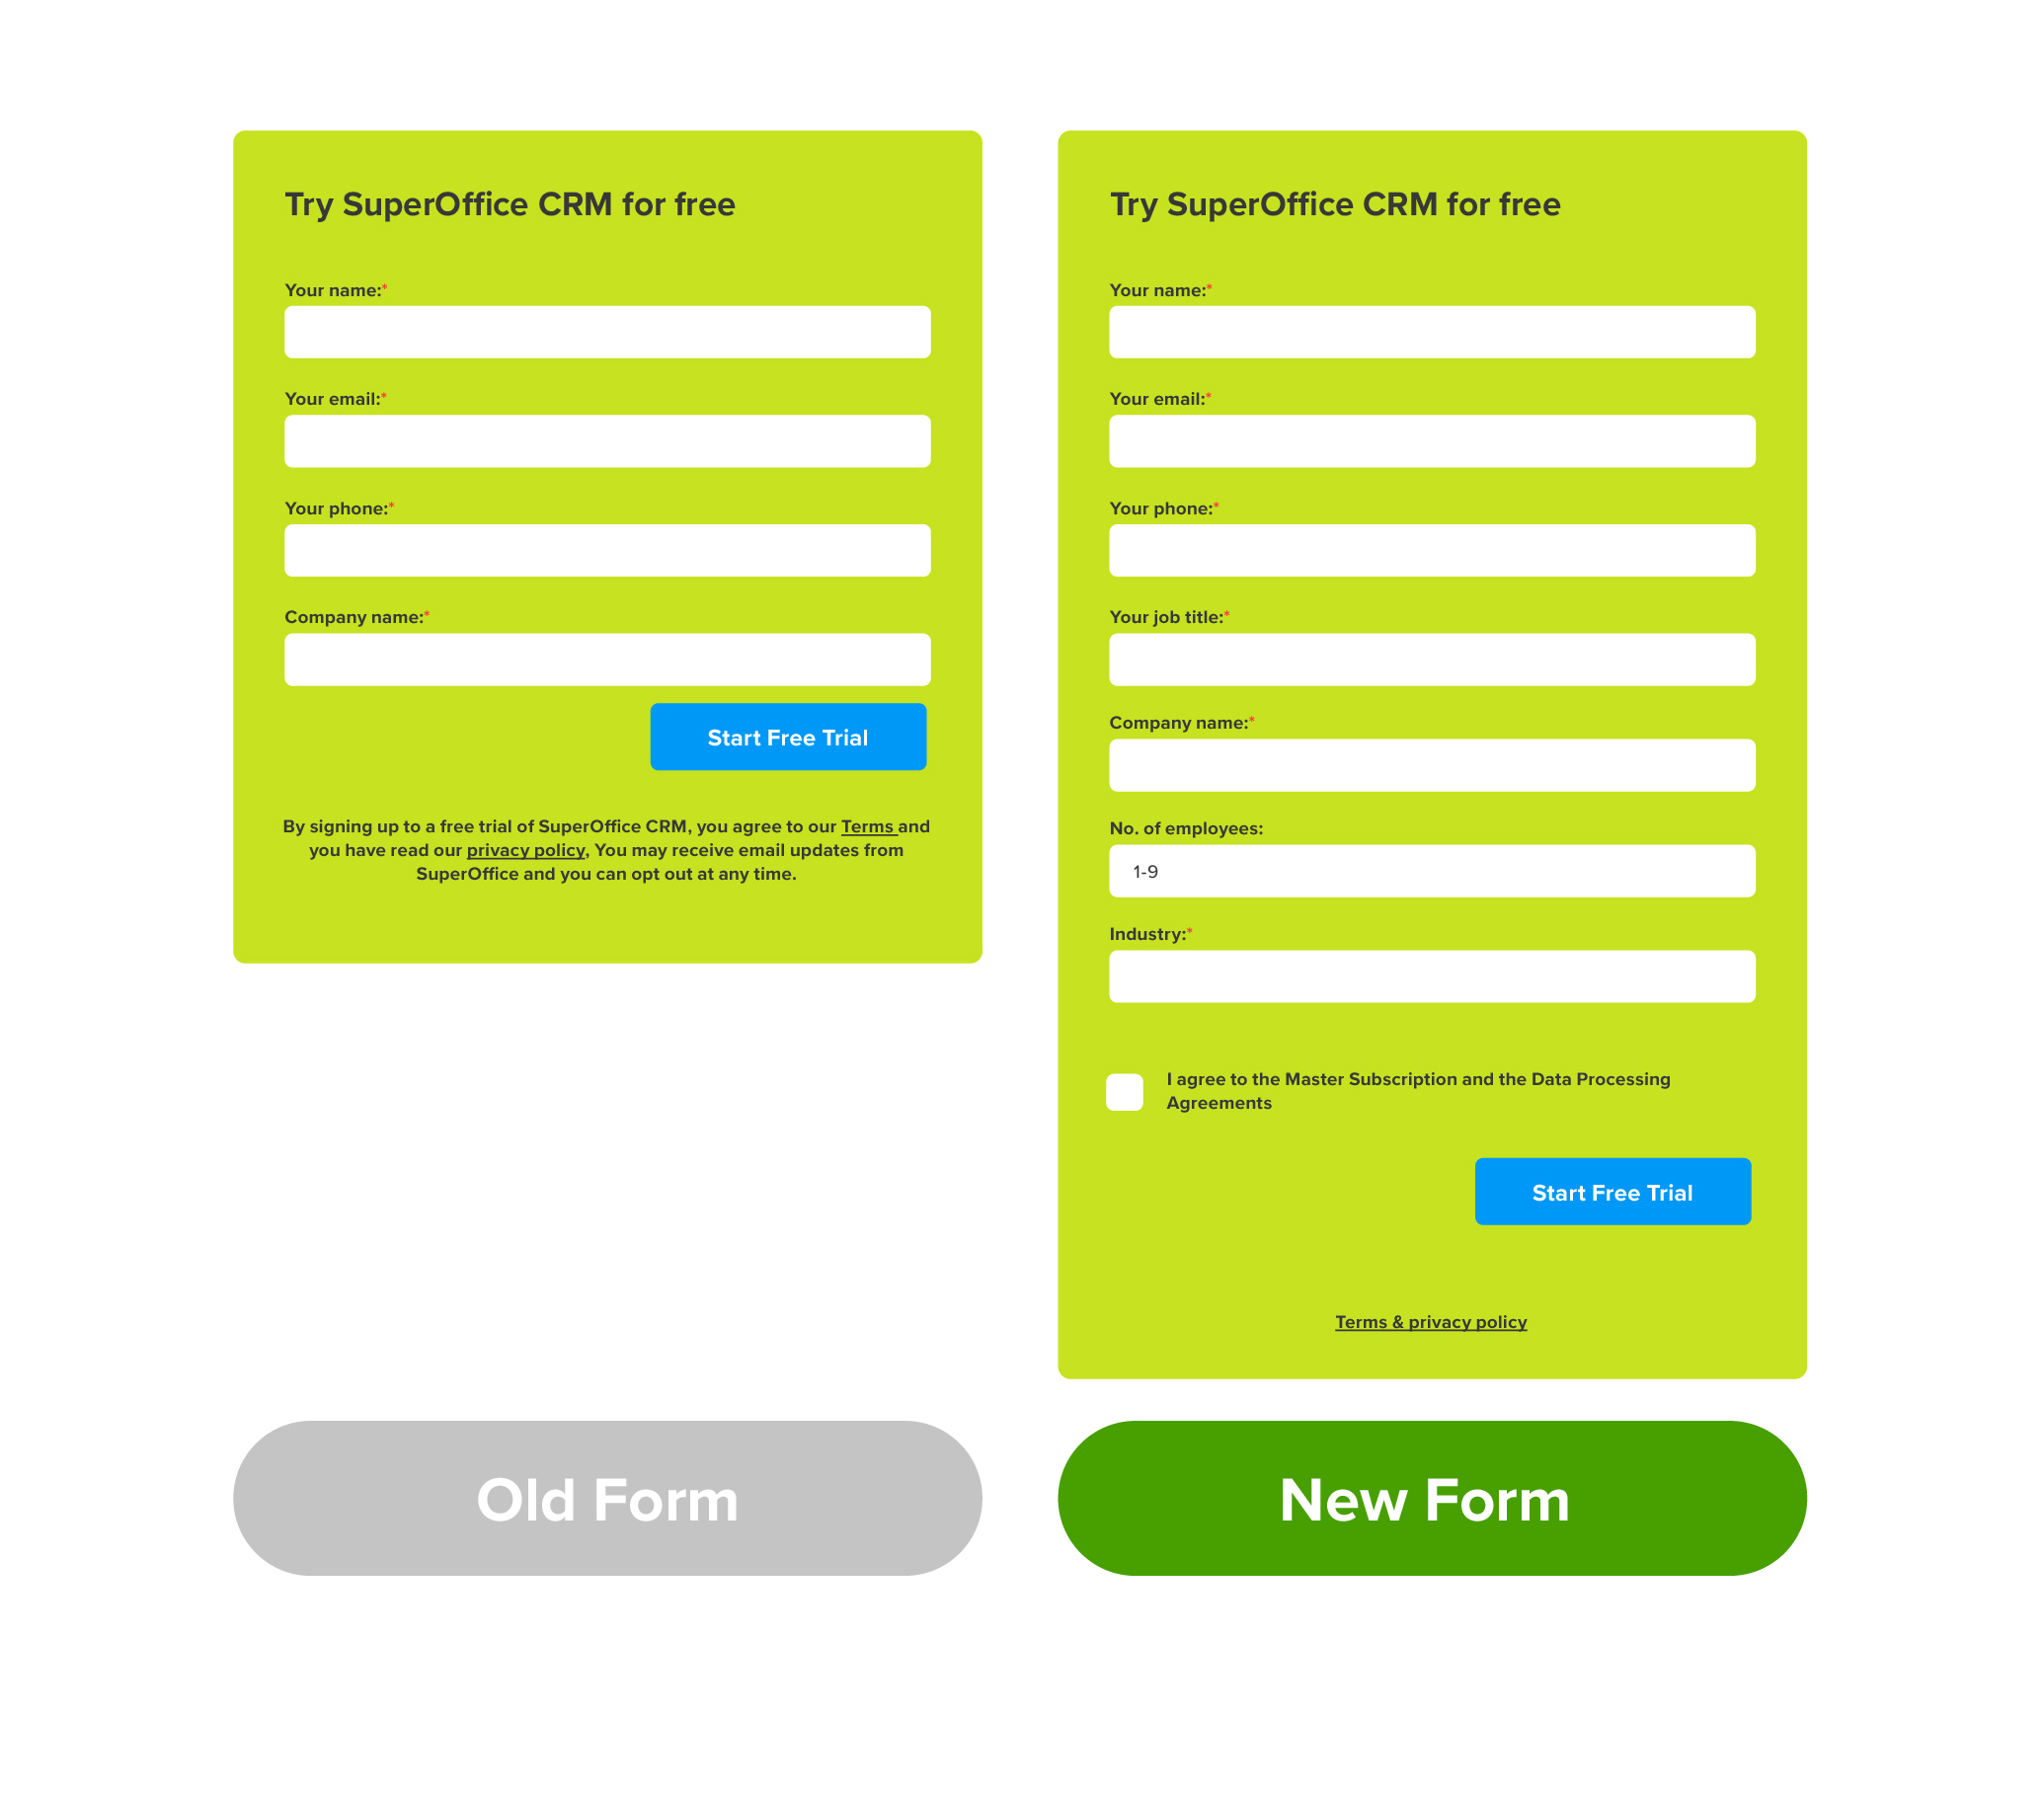 Short web form vs long web form